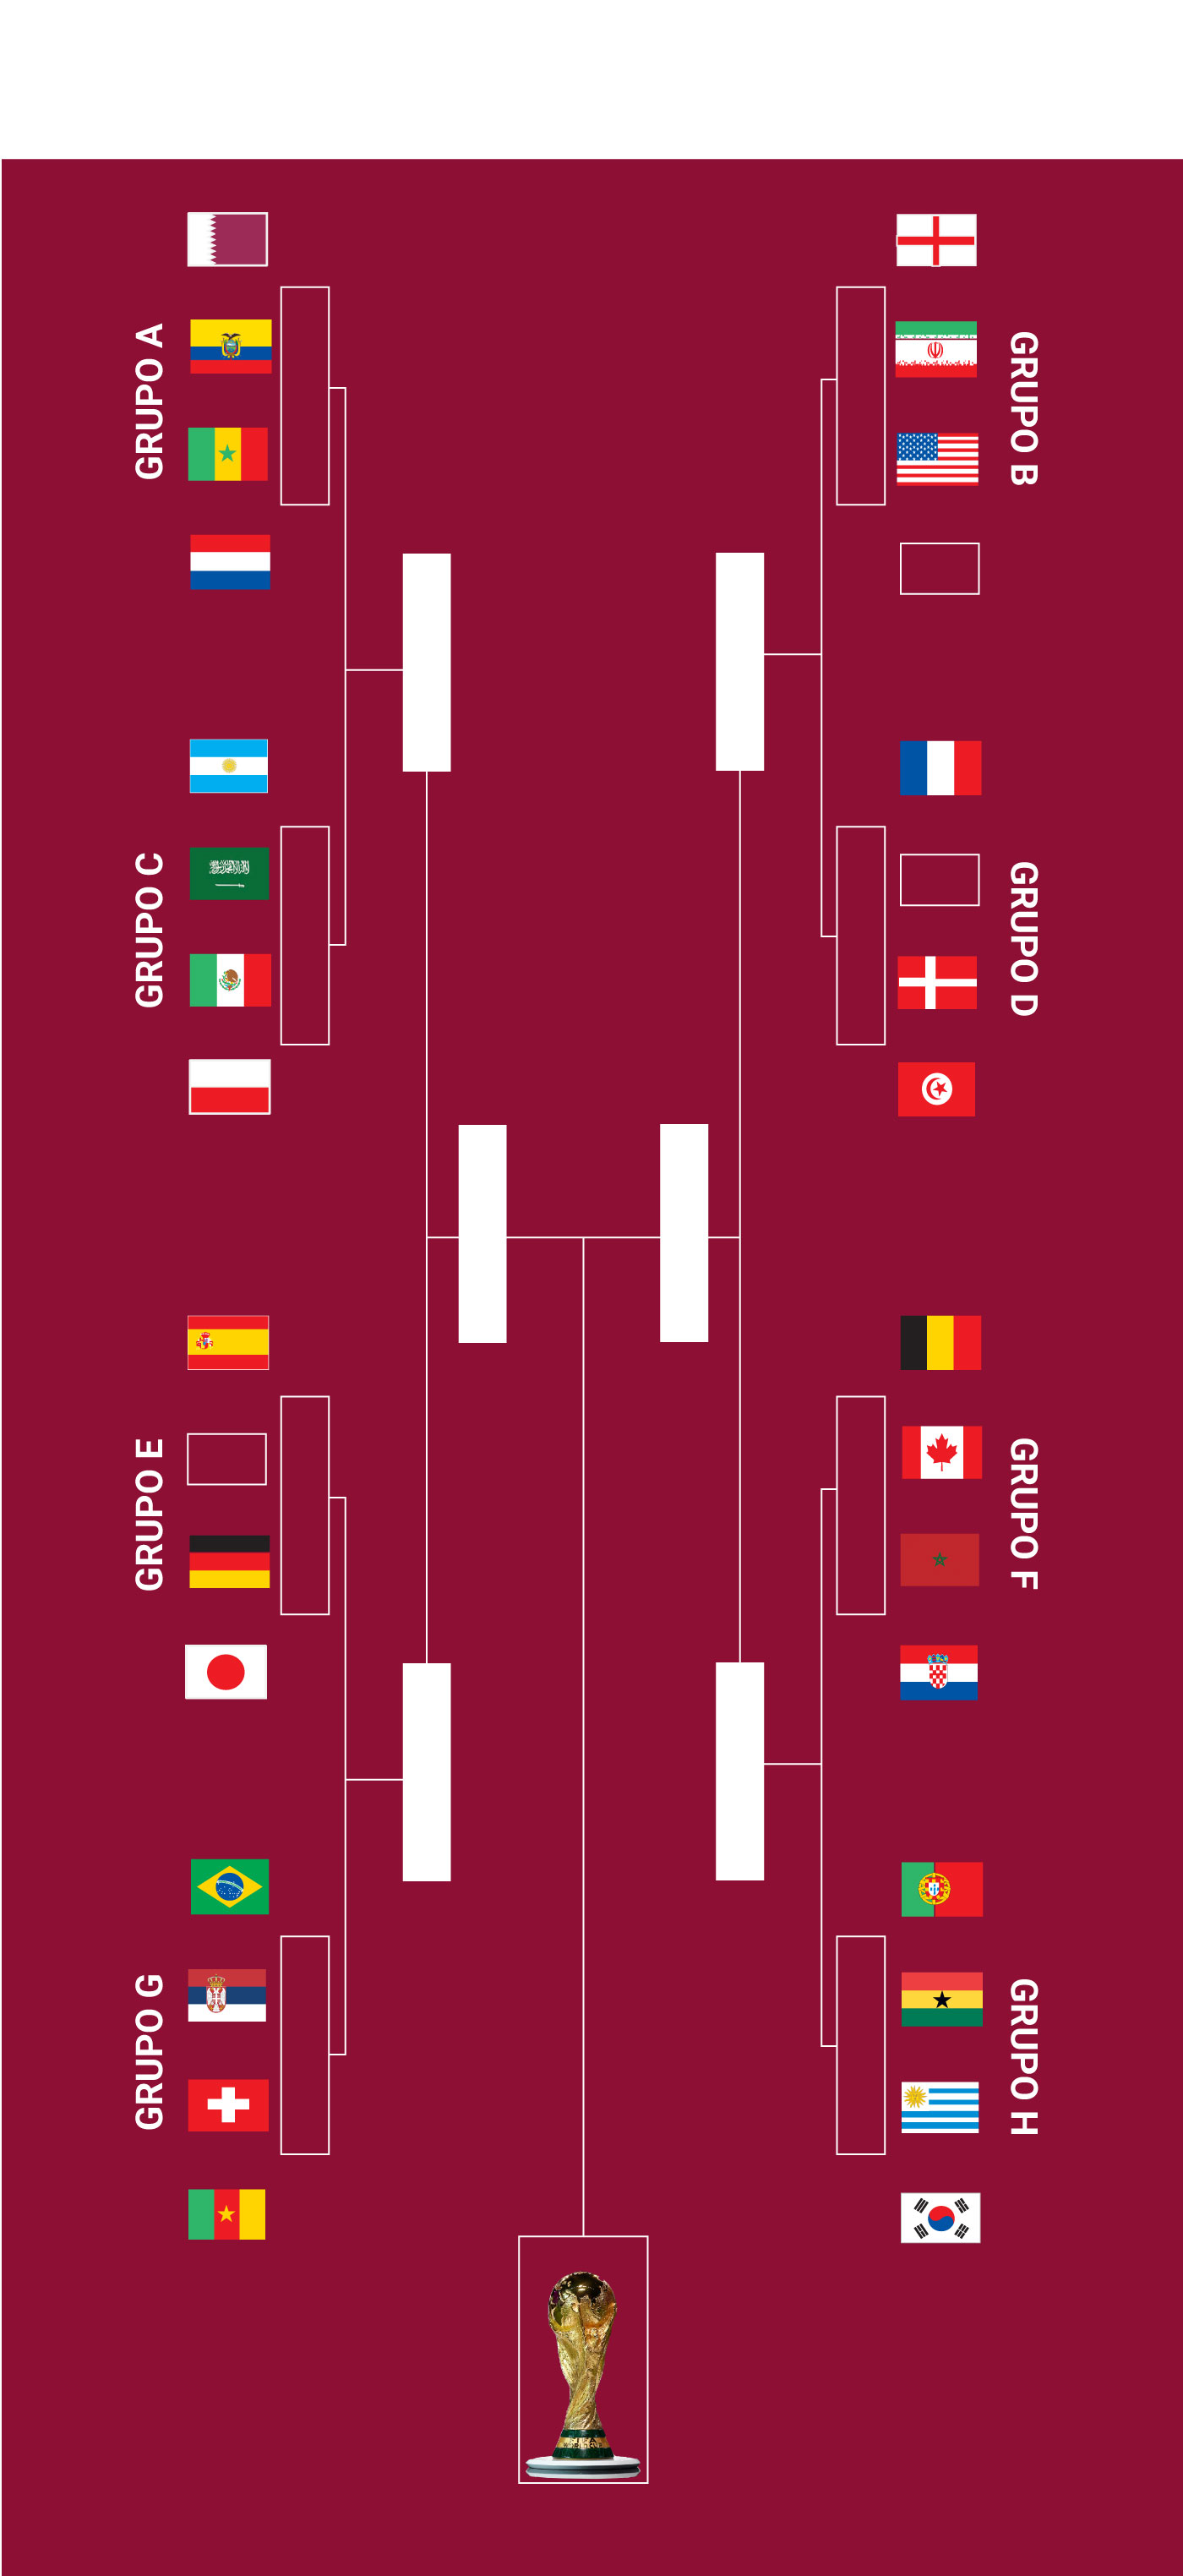 Chaveamento do Mundial de Clubes 2022: os cruzamentos até a final